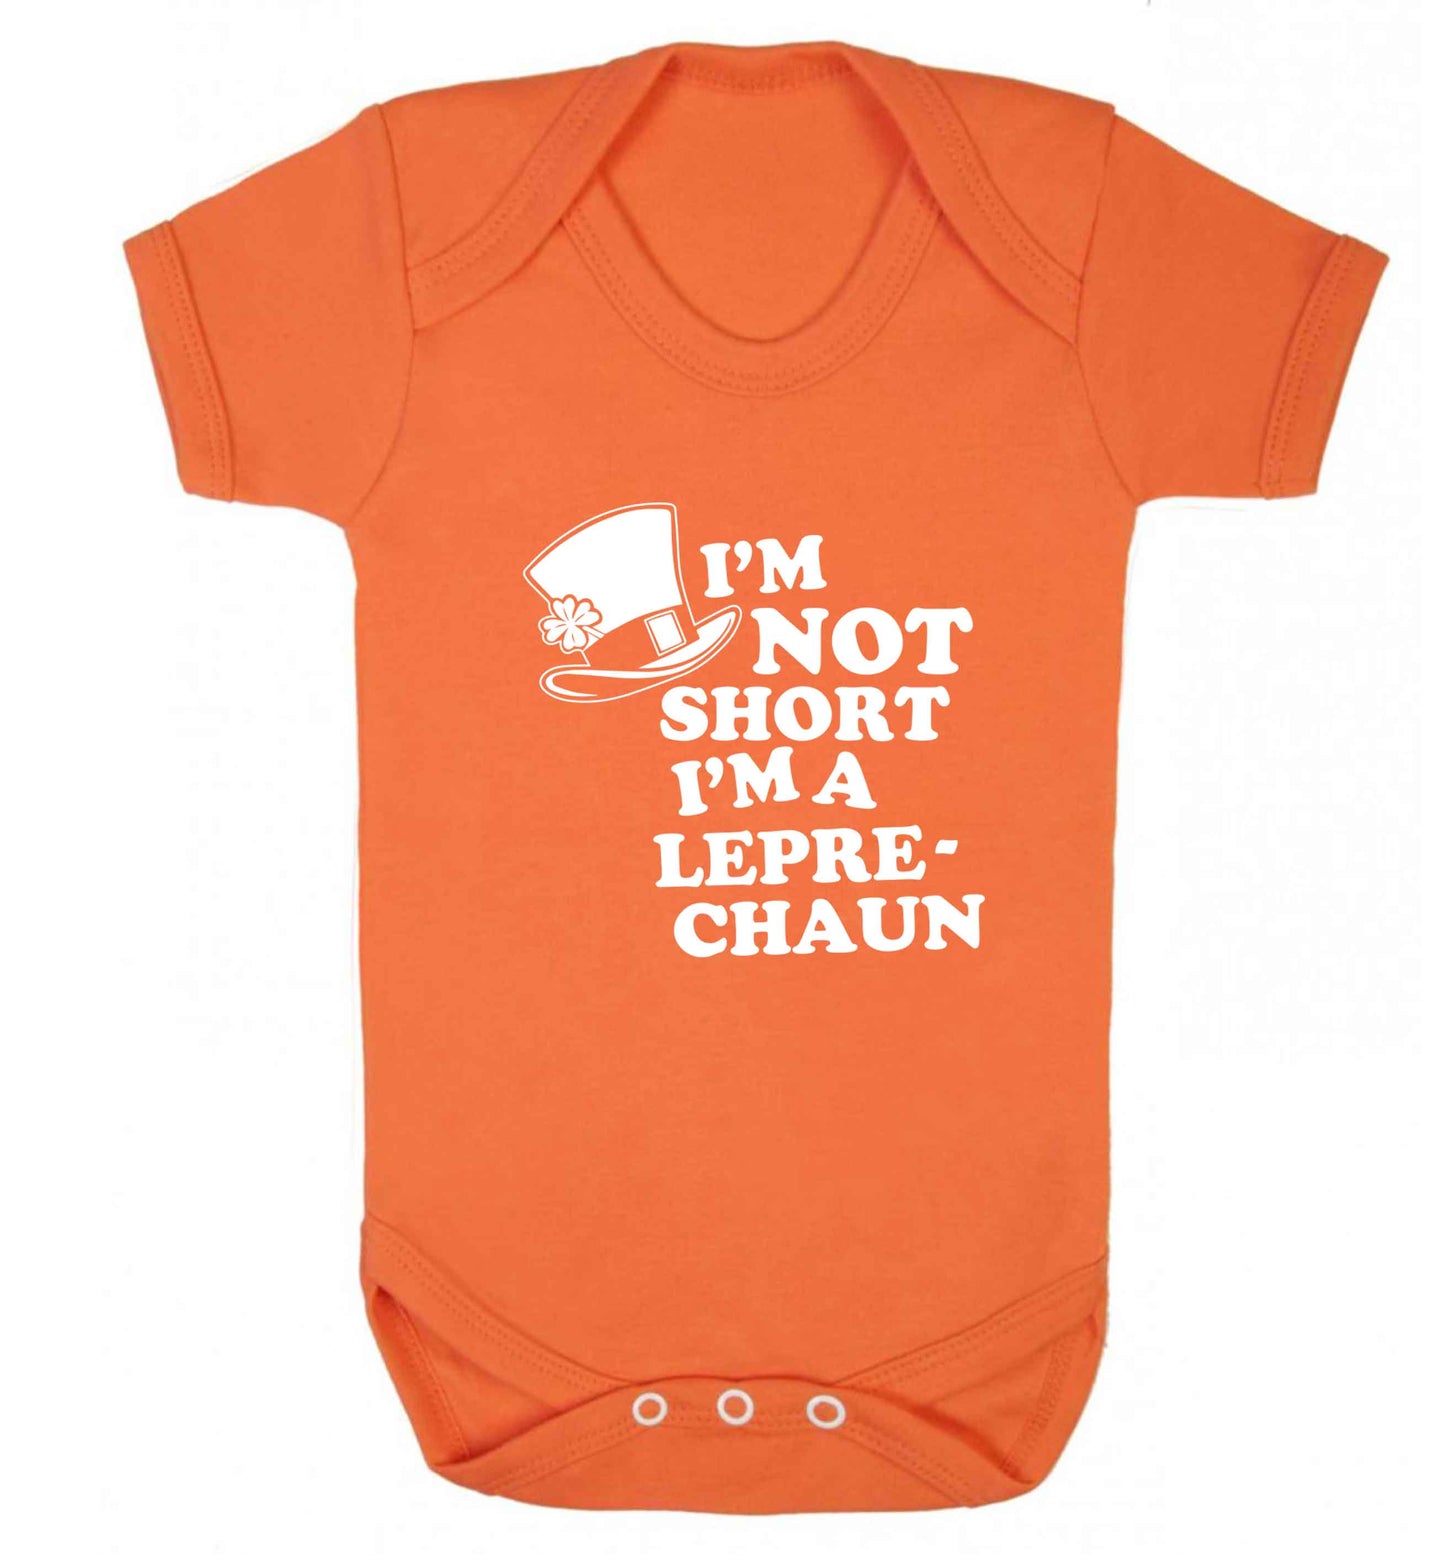 I'm not short I'm a leprechaun baby vest orange 18-24 months